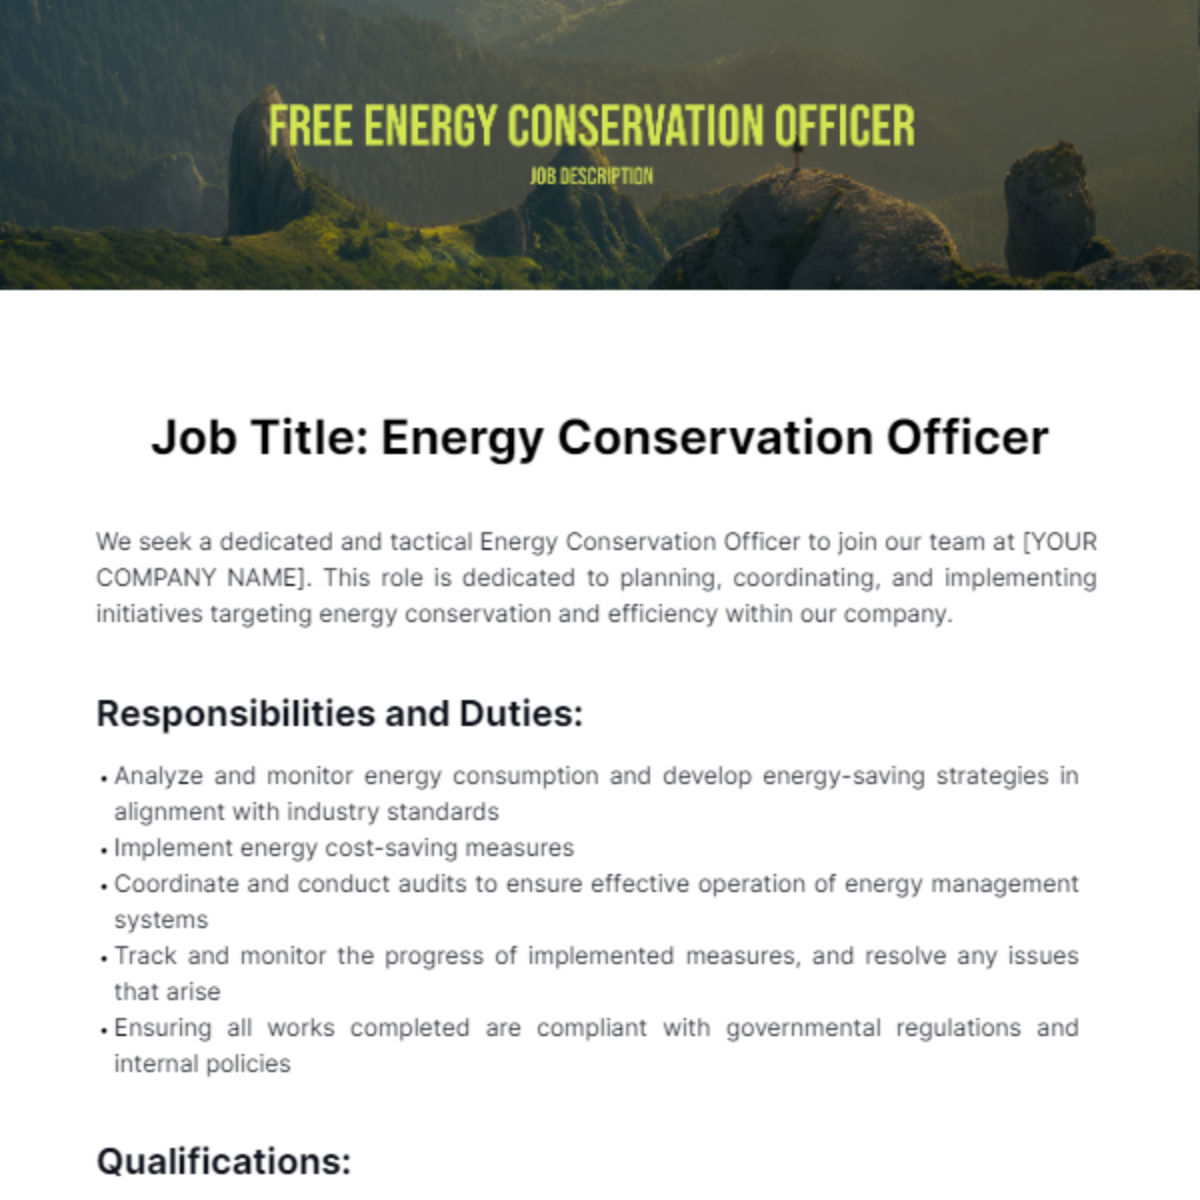 Free Energy Conservation Officer Job Description Template